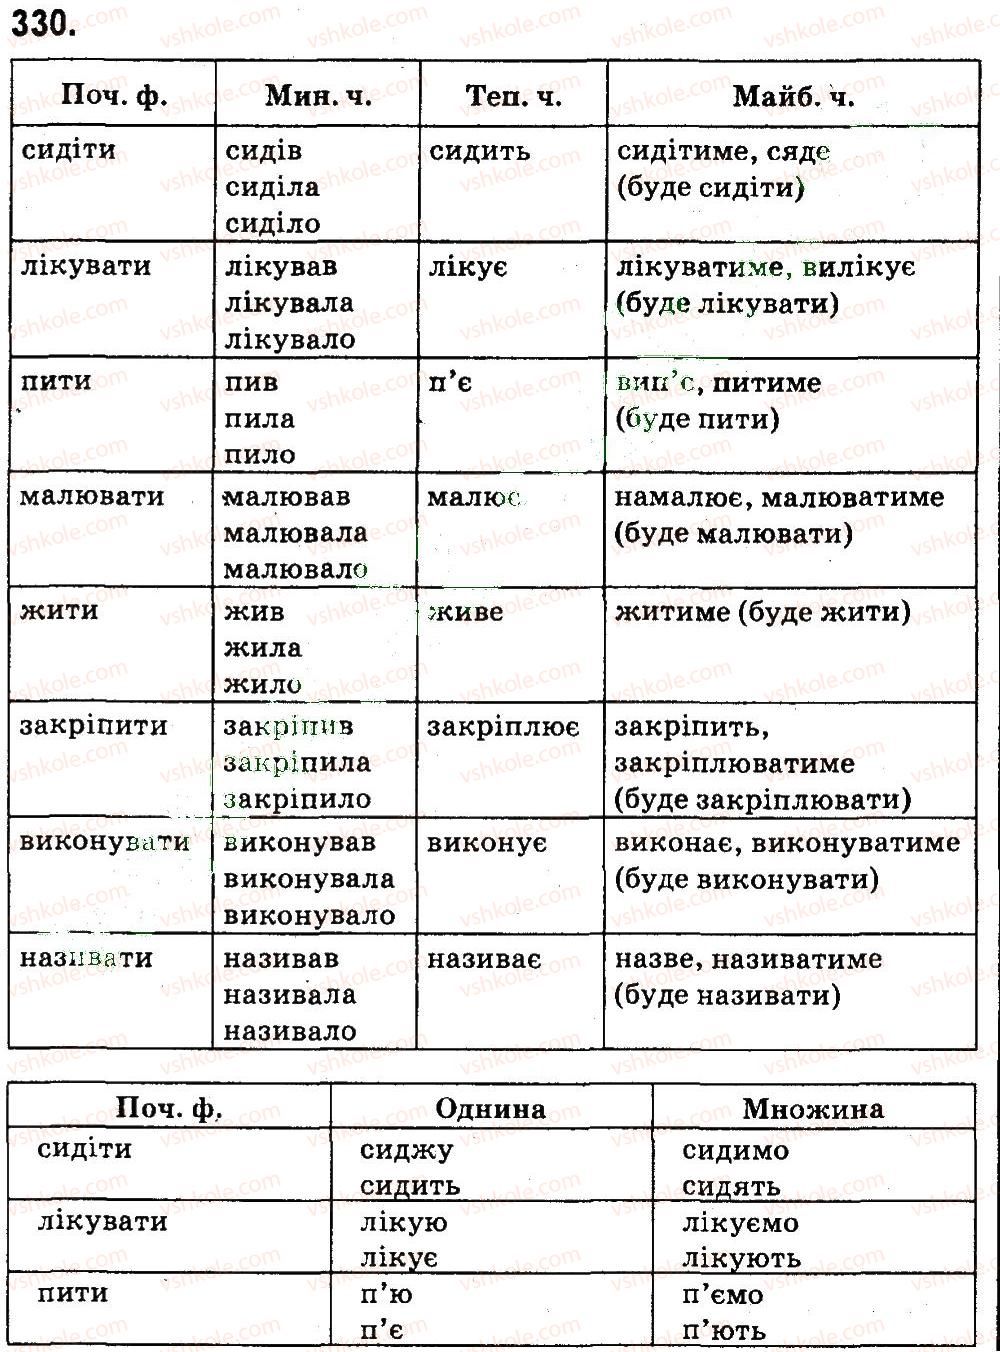 4-ukrayinska-mova-md-zaharijchuk-ai-movchun-2015--vpravi-301-419-330.jpg